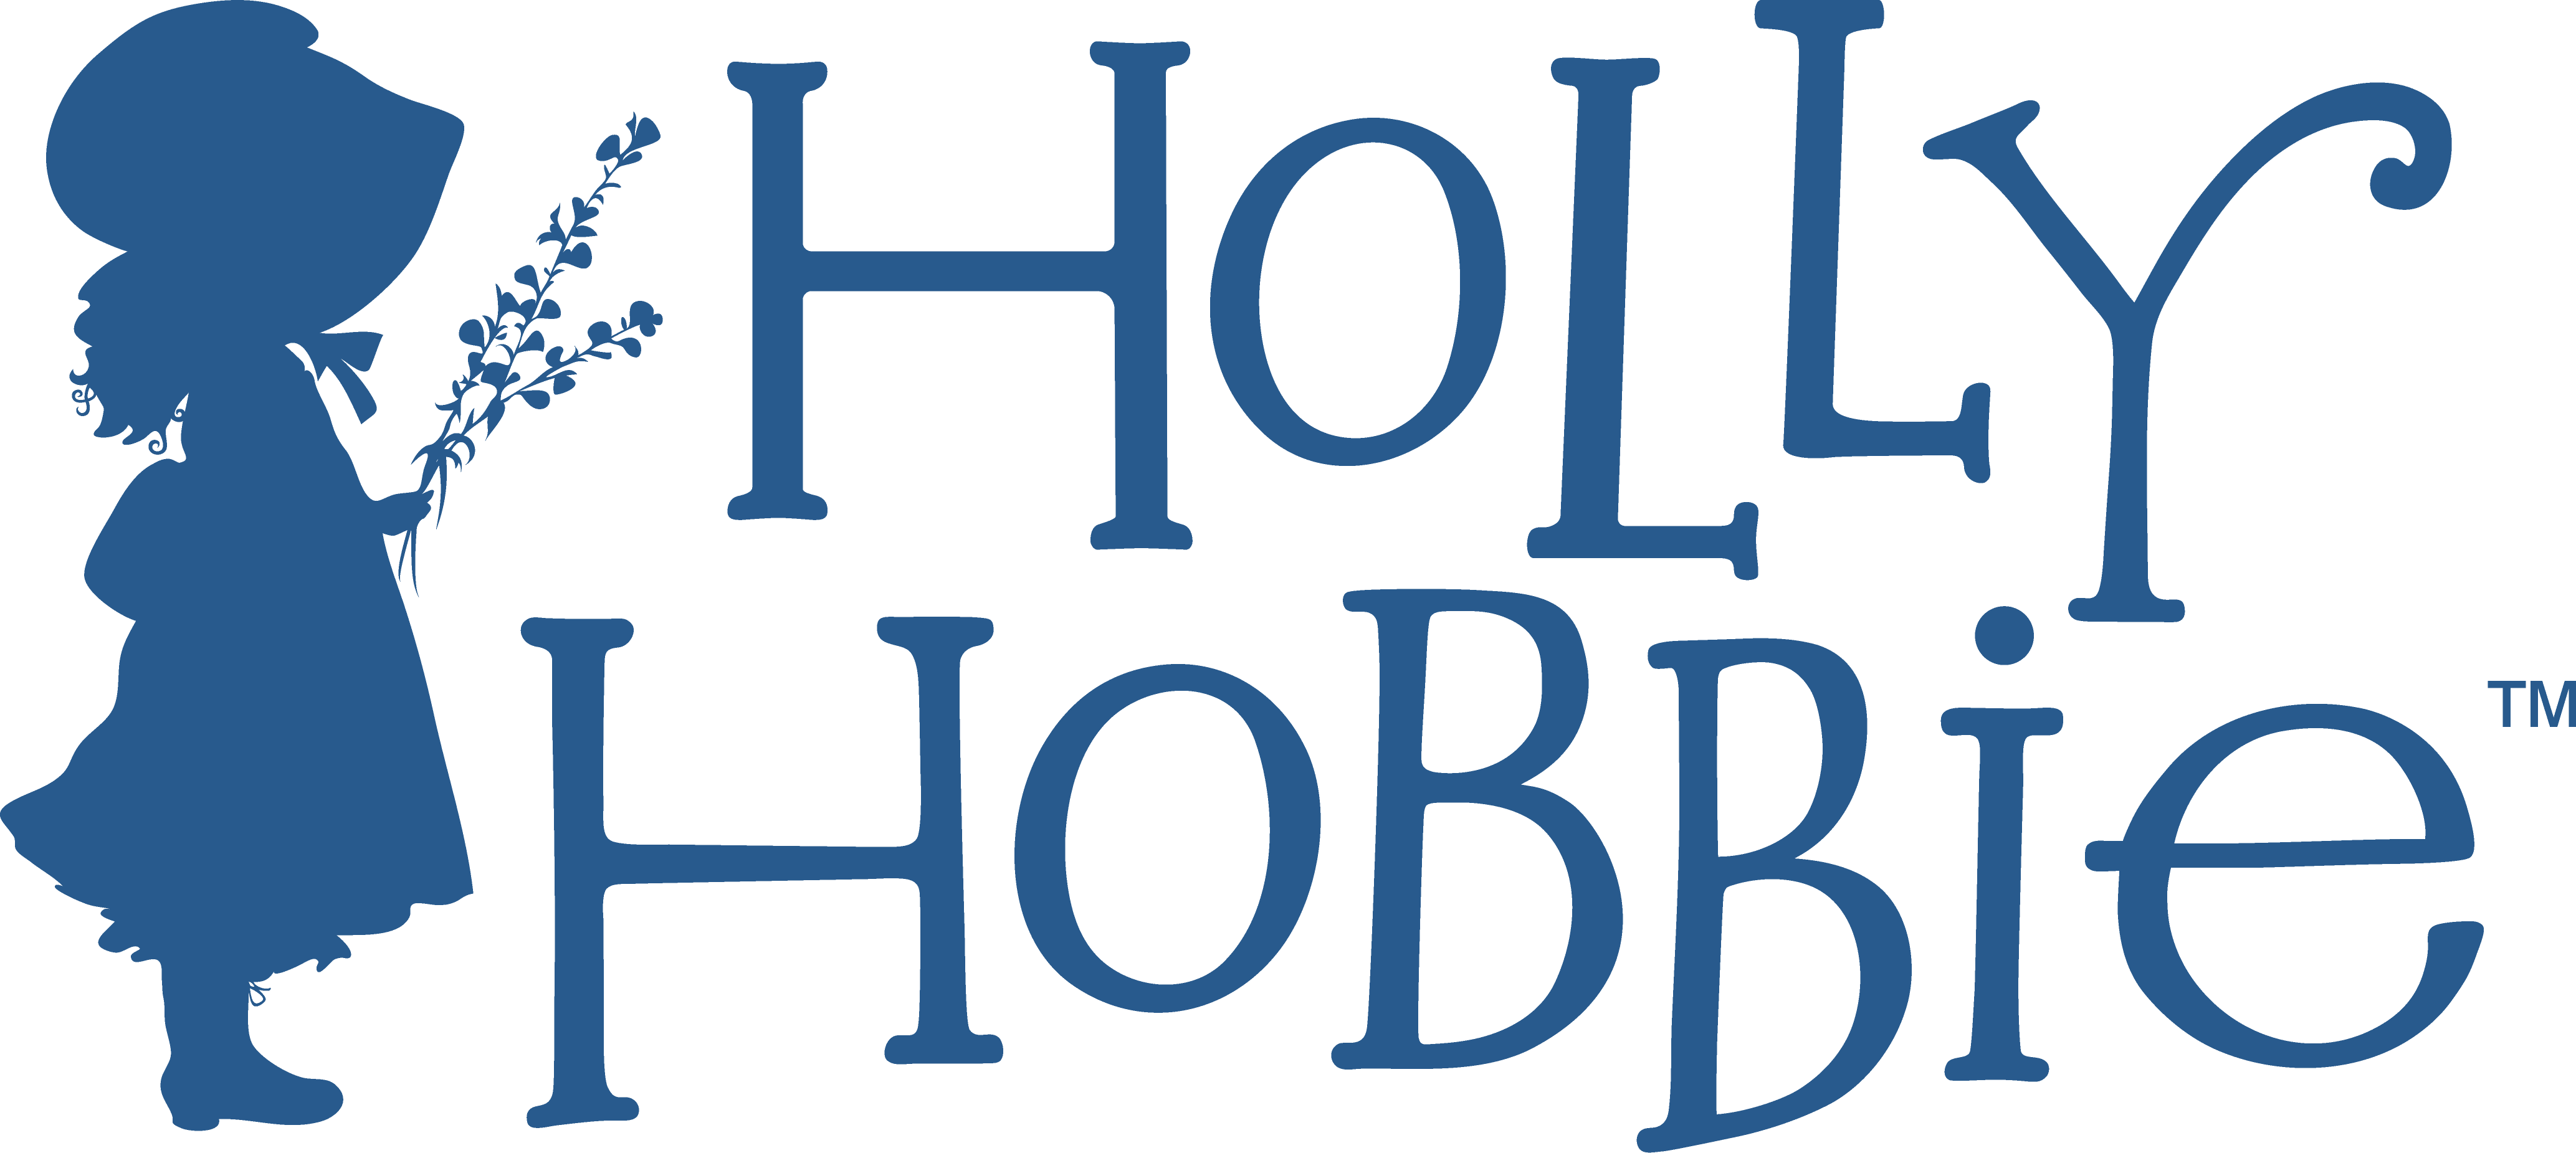 Holly Hobbie Heritage Store